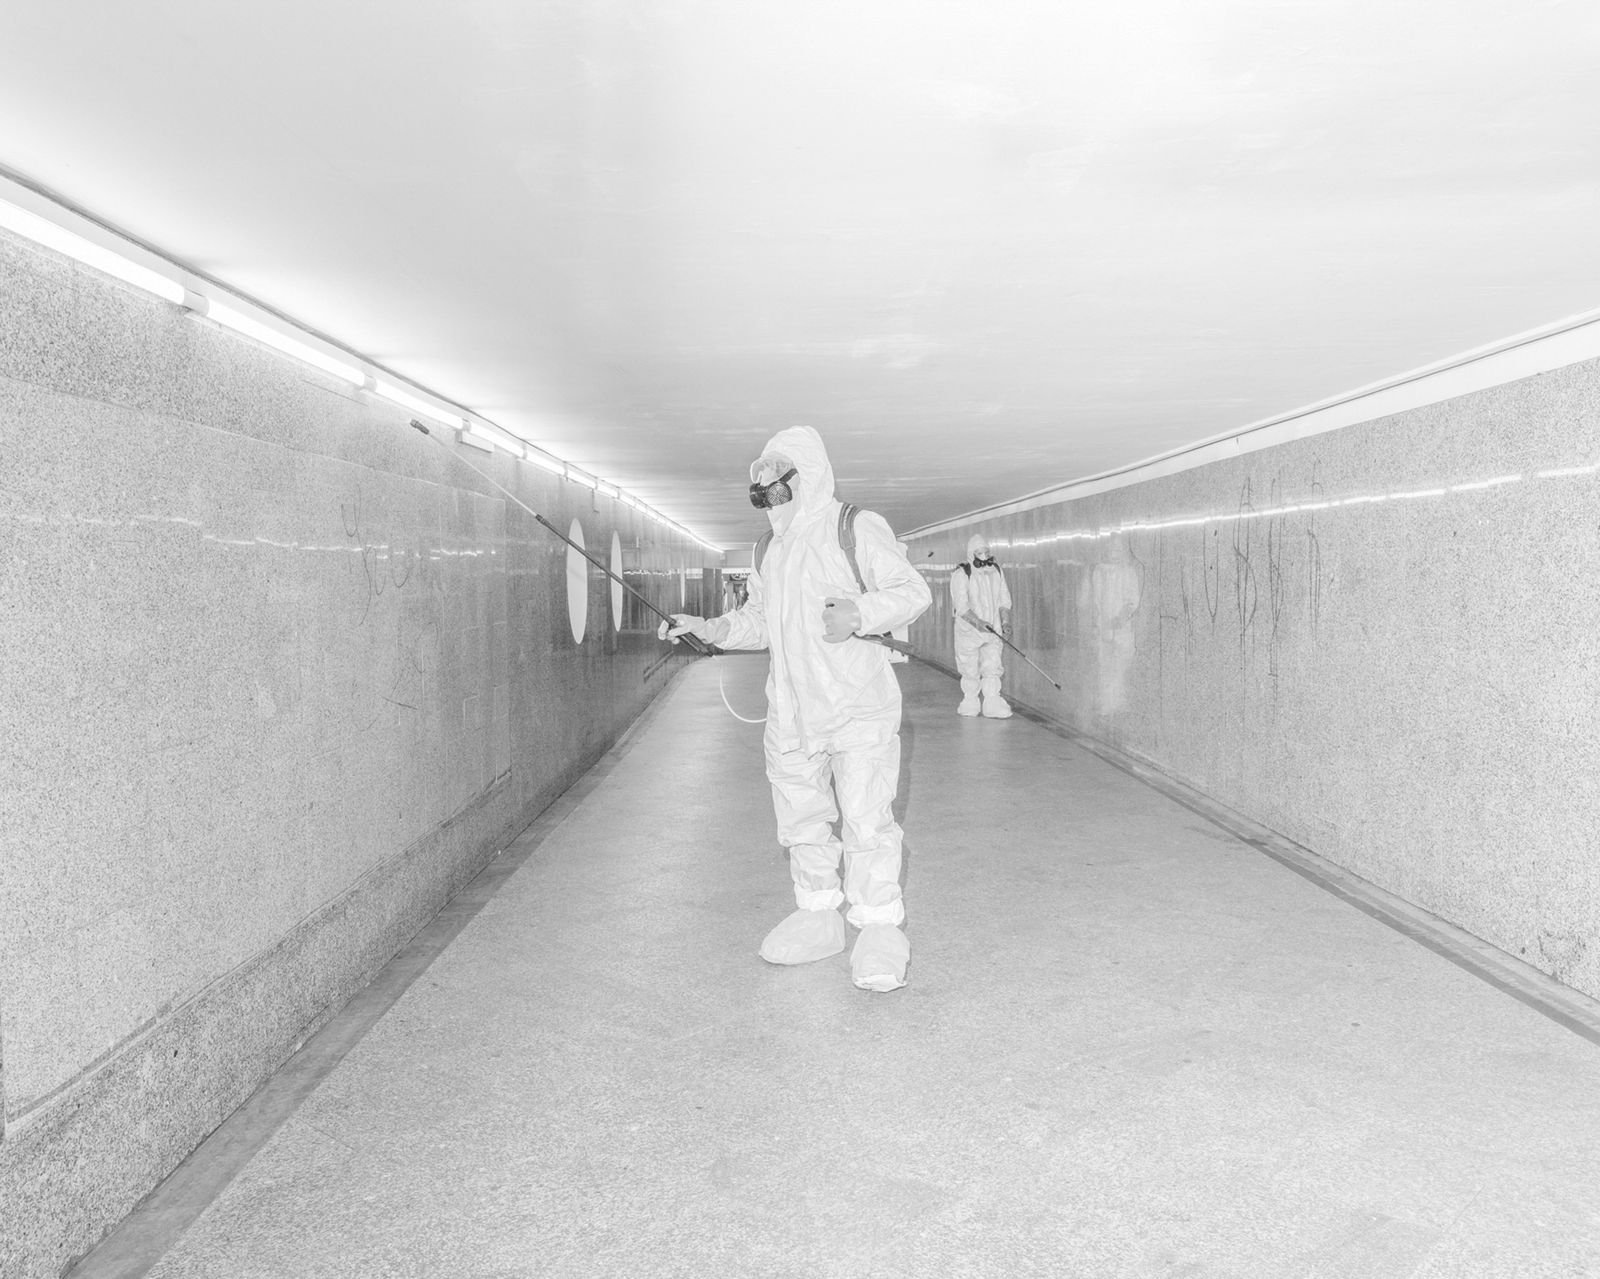 © Tomasz Lazar - Ozonation of the underground passage in the city center. Warsaw, Poland, 07.04.2020